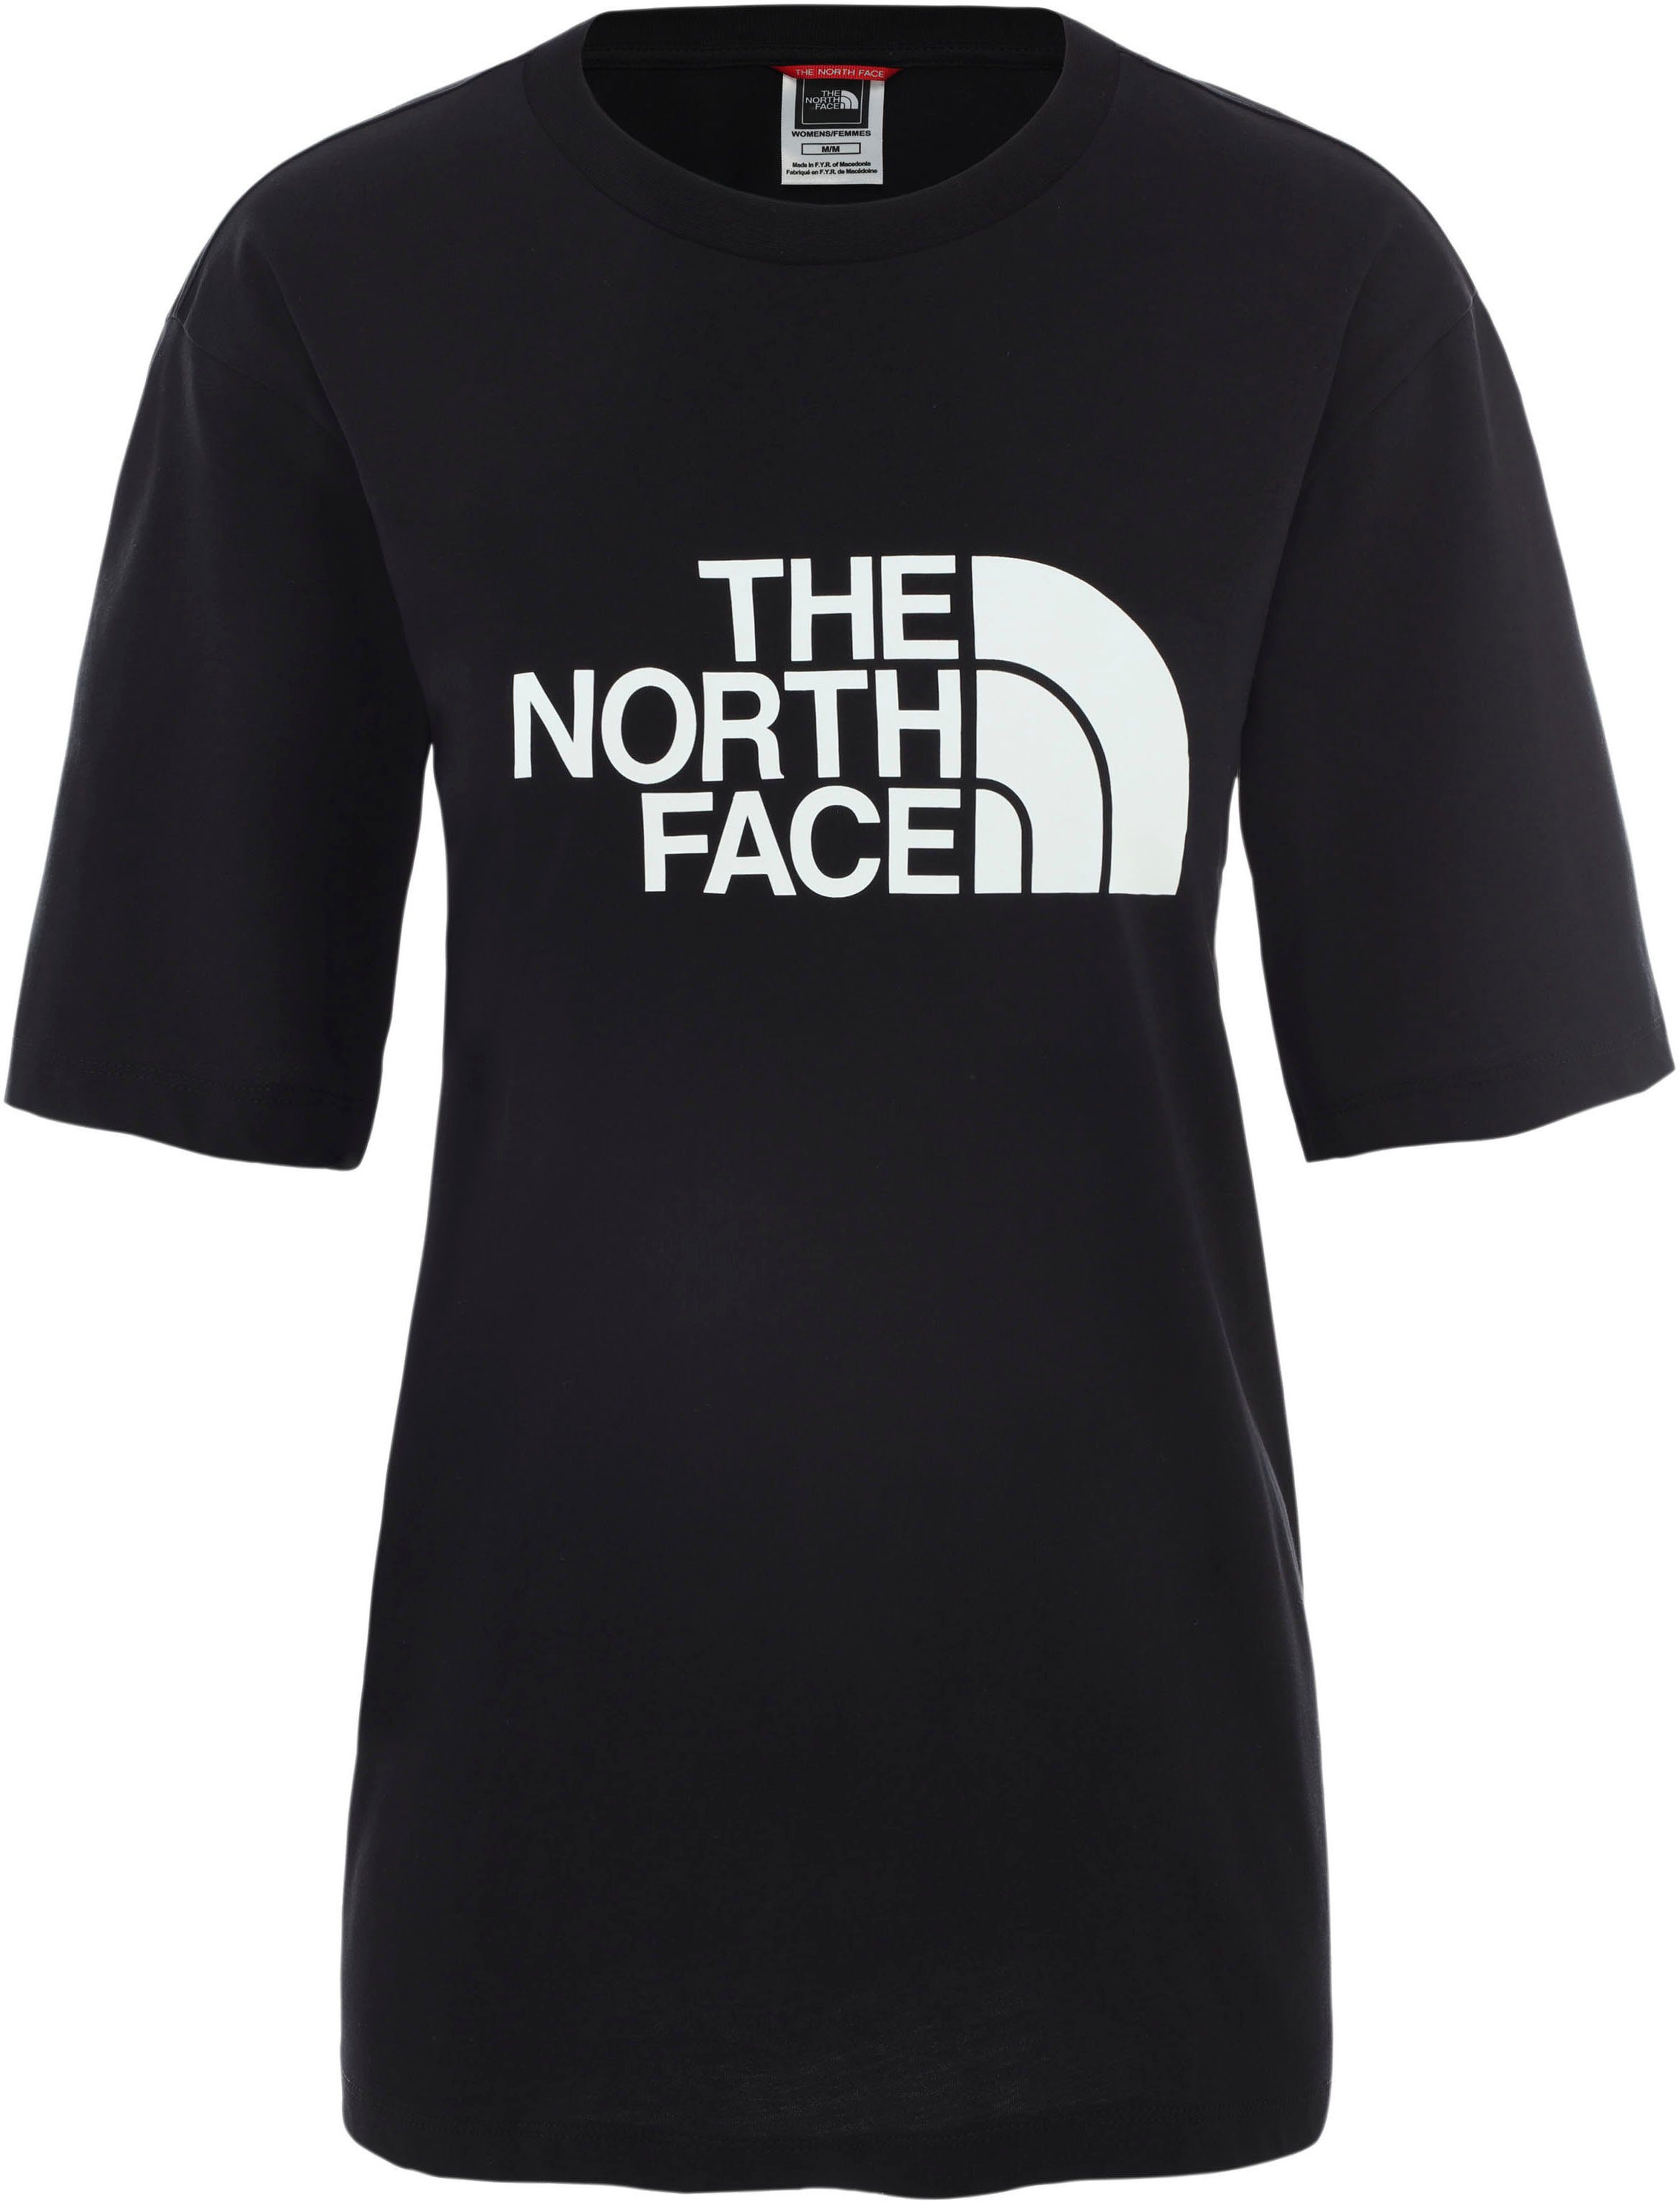 The North Face T-Shirt W mit der EASY black RELAXED TEE Brust Logodruck auf